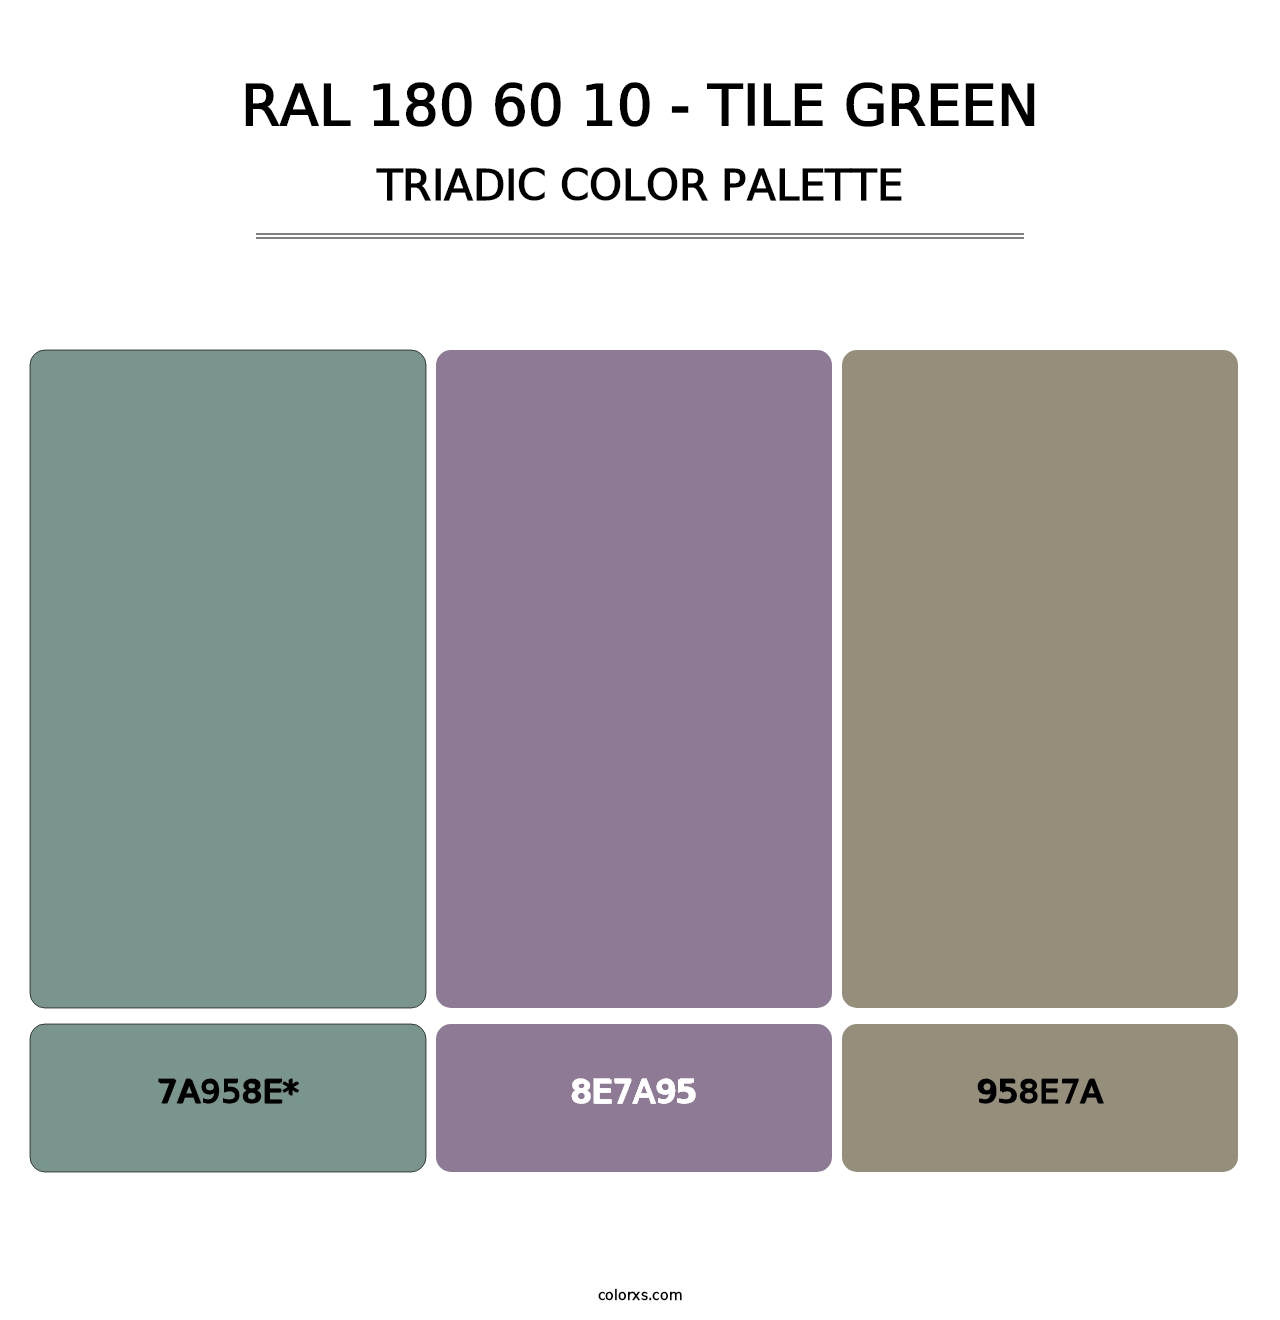 RAL 180 60 10 - Tile Green - Triadic Color Palette